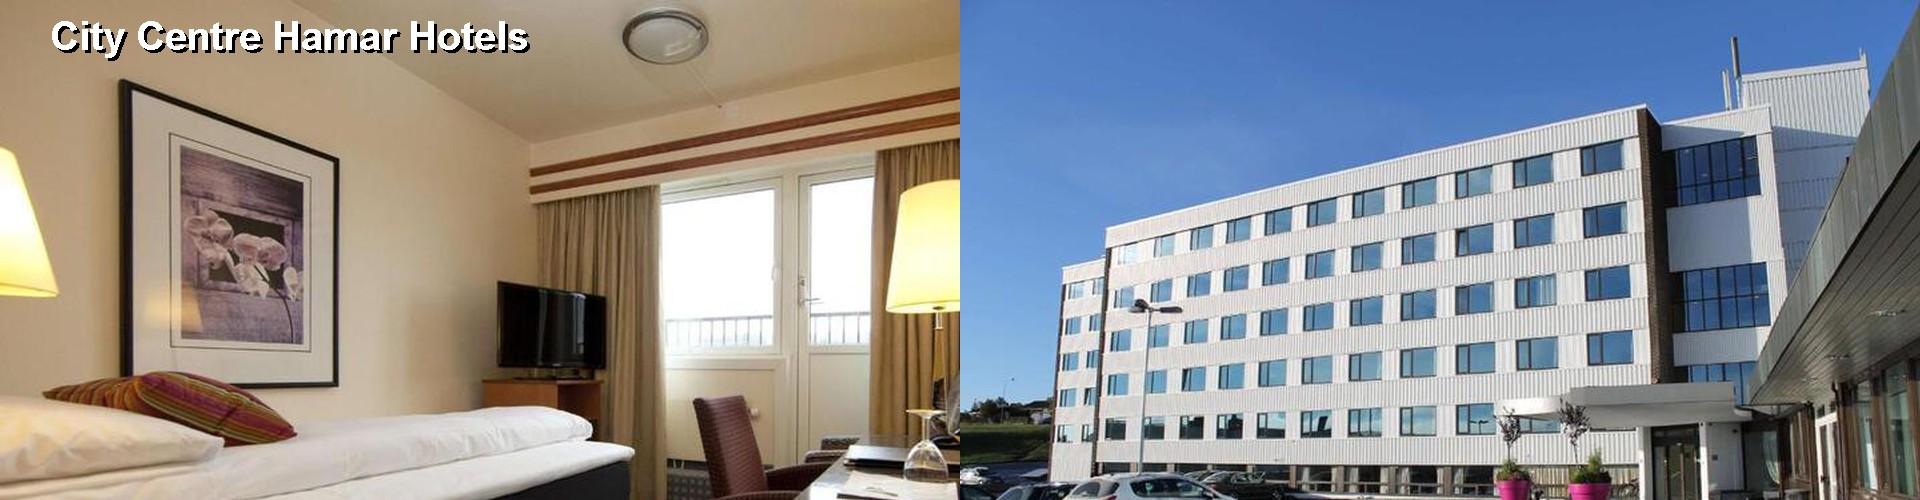 3 Best Hotels near City Centre Hamar